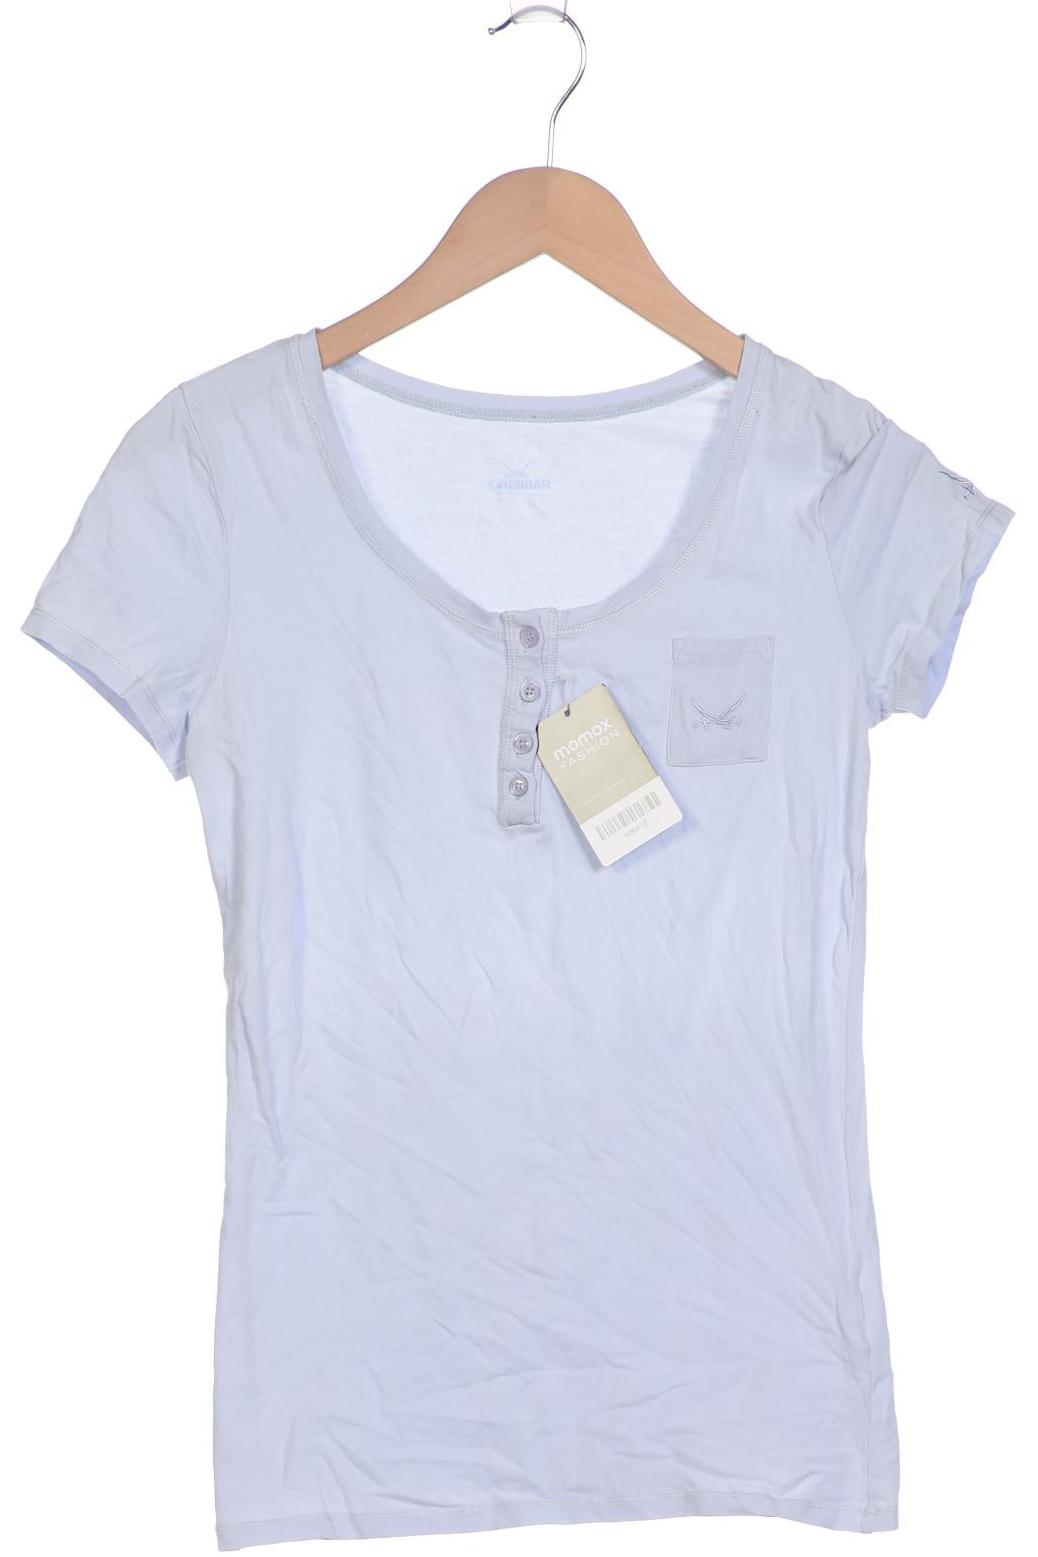 SANSIBAR Damen T-Shirt, hellblau von Sansibar